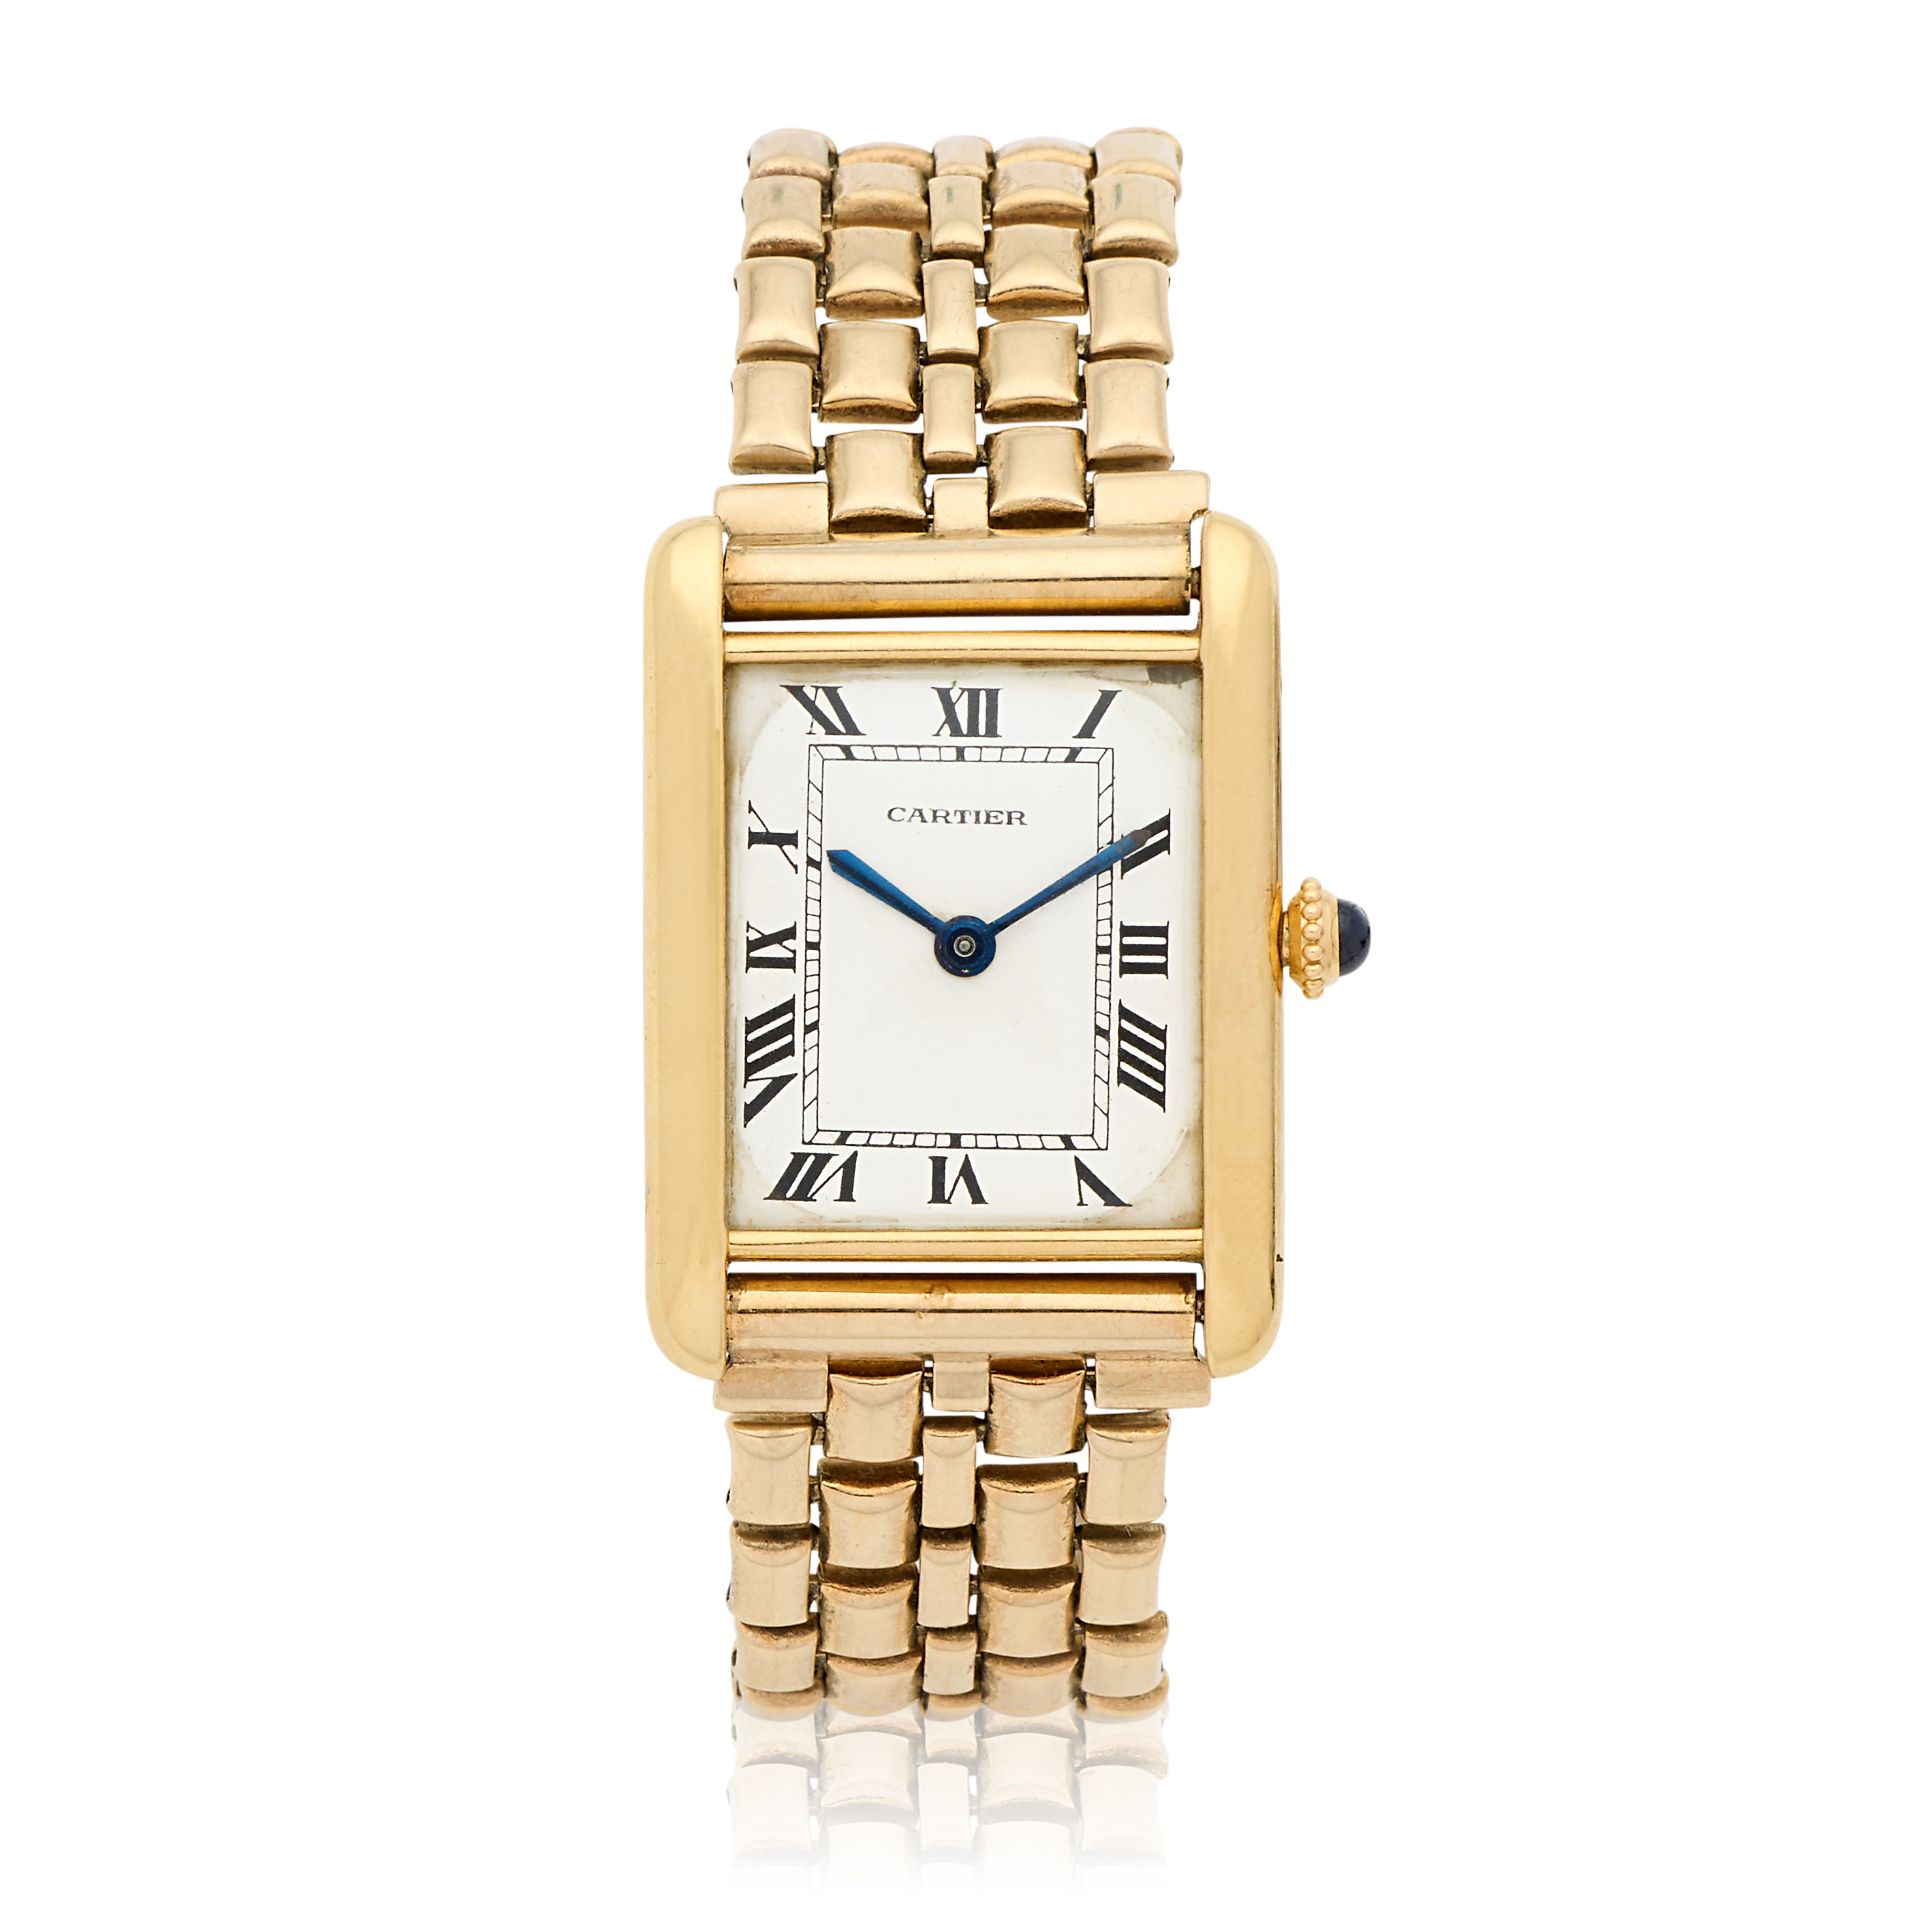 Cartier. An 18K gold manual wind bracelet watch Tank, London Hallmark for 1964